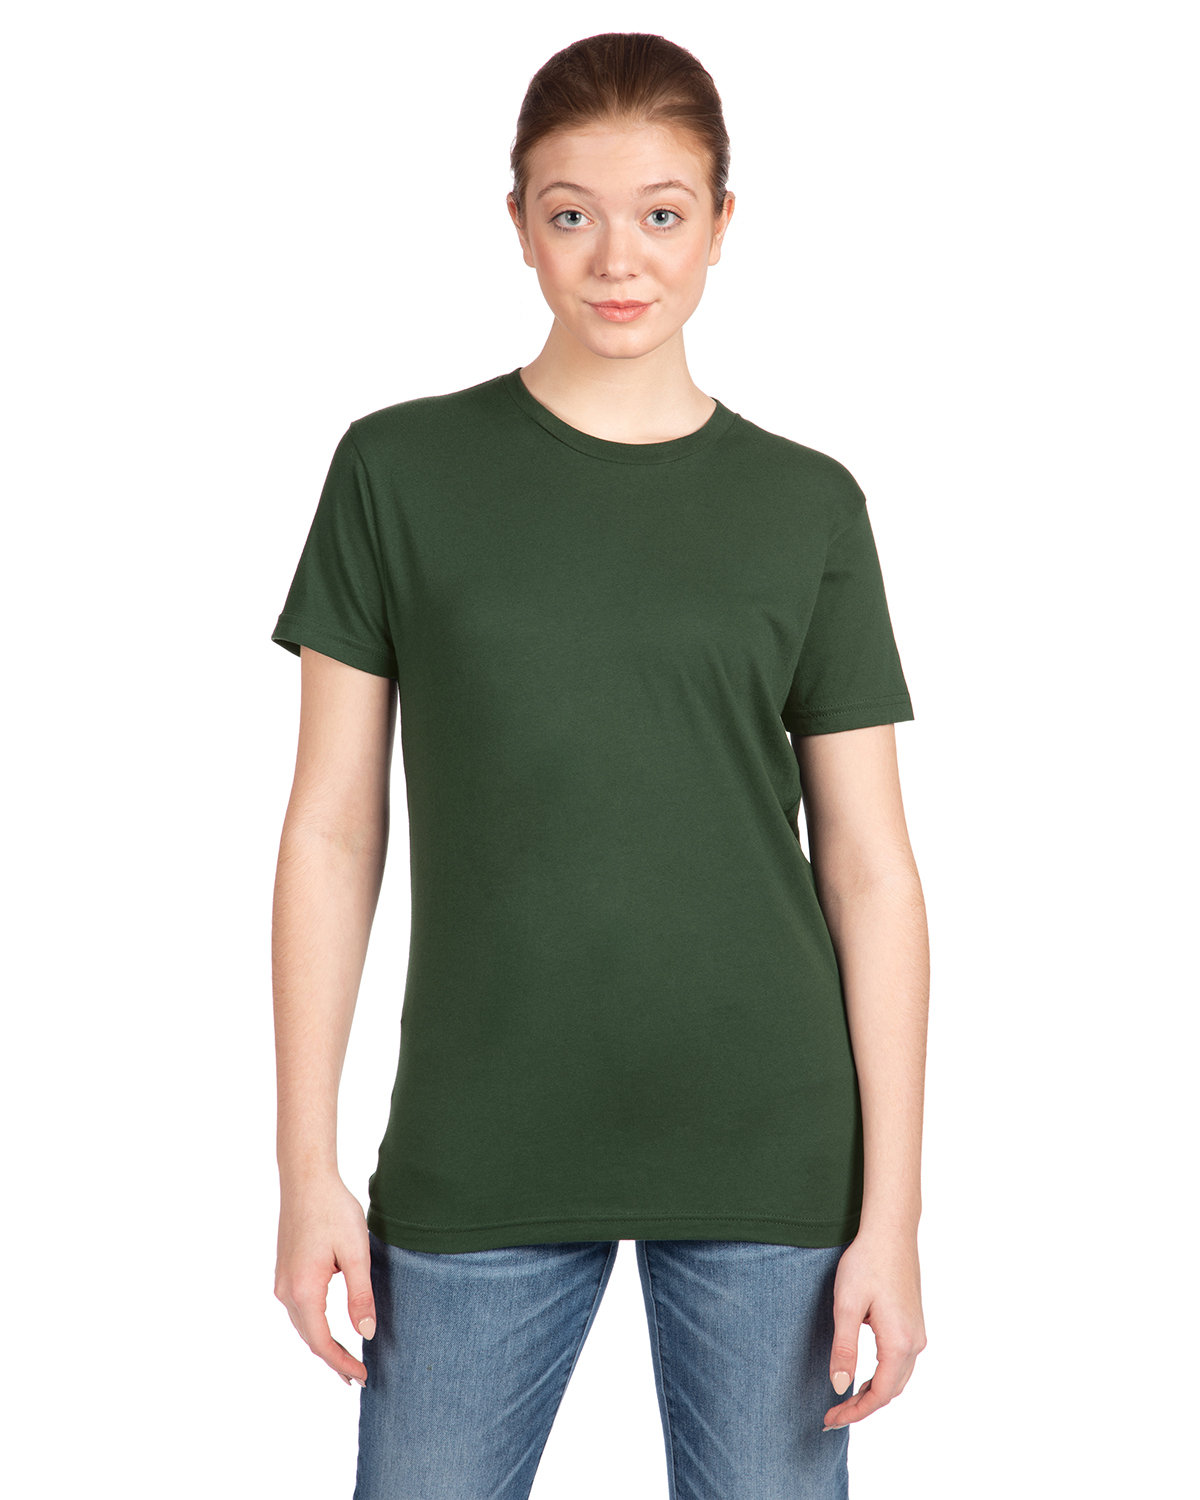 Next Level Apparel Unisex Cotton T-Shirt forest green 